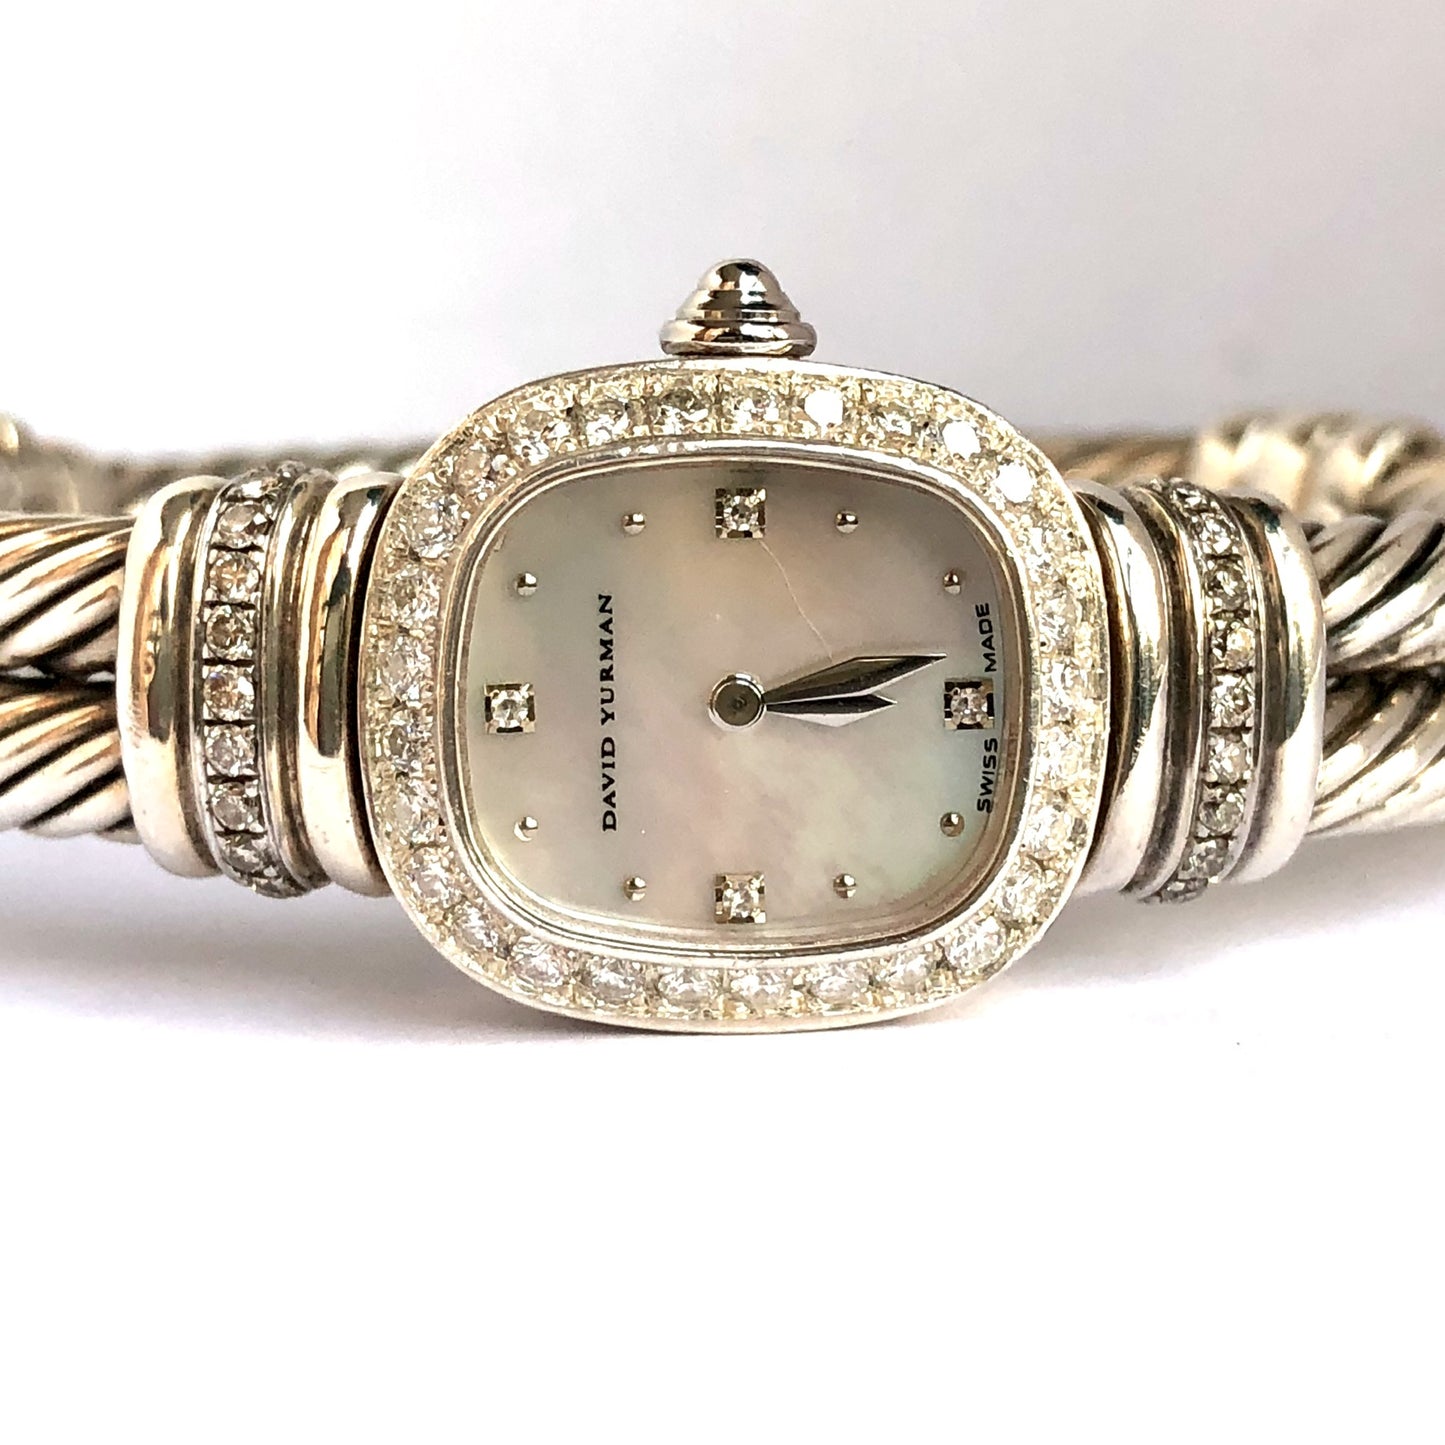 DAVID YURMAN CHELSEA Quartz 19mm 925 Silver Cable Bracelet 0.66TCW DIAMOND Watch